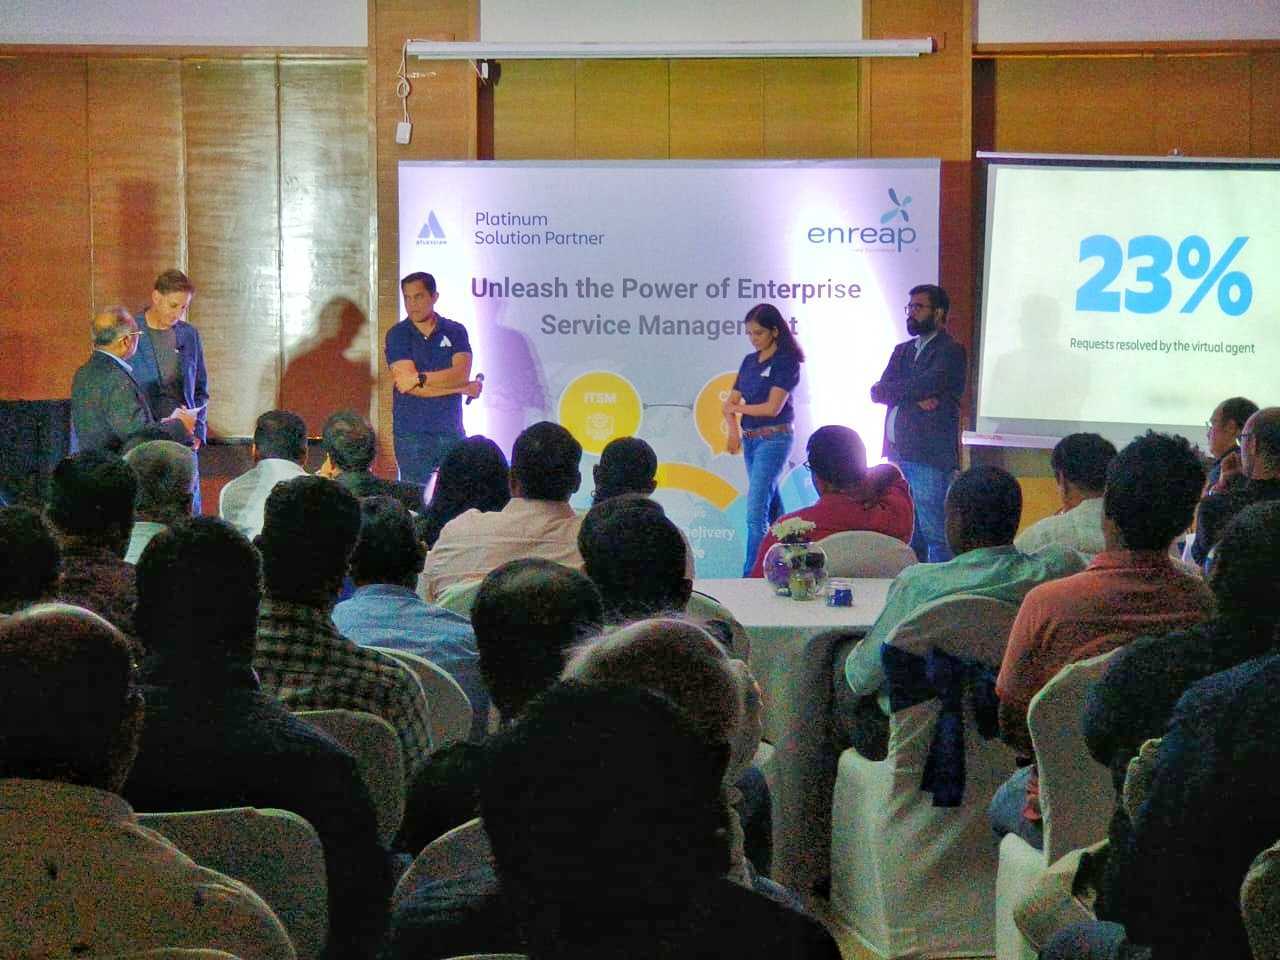 Atlassian itsm bangalore event-5